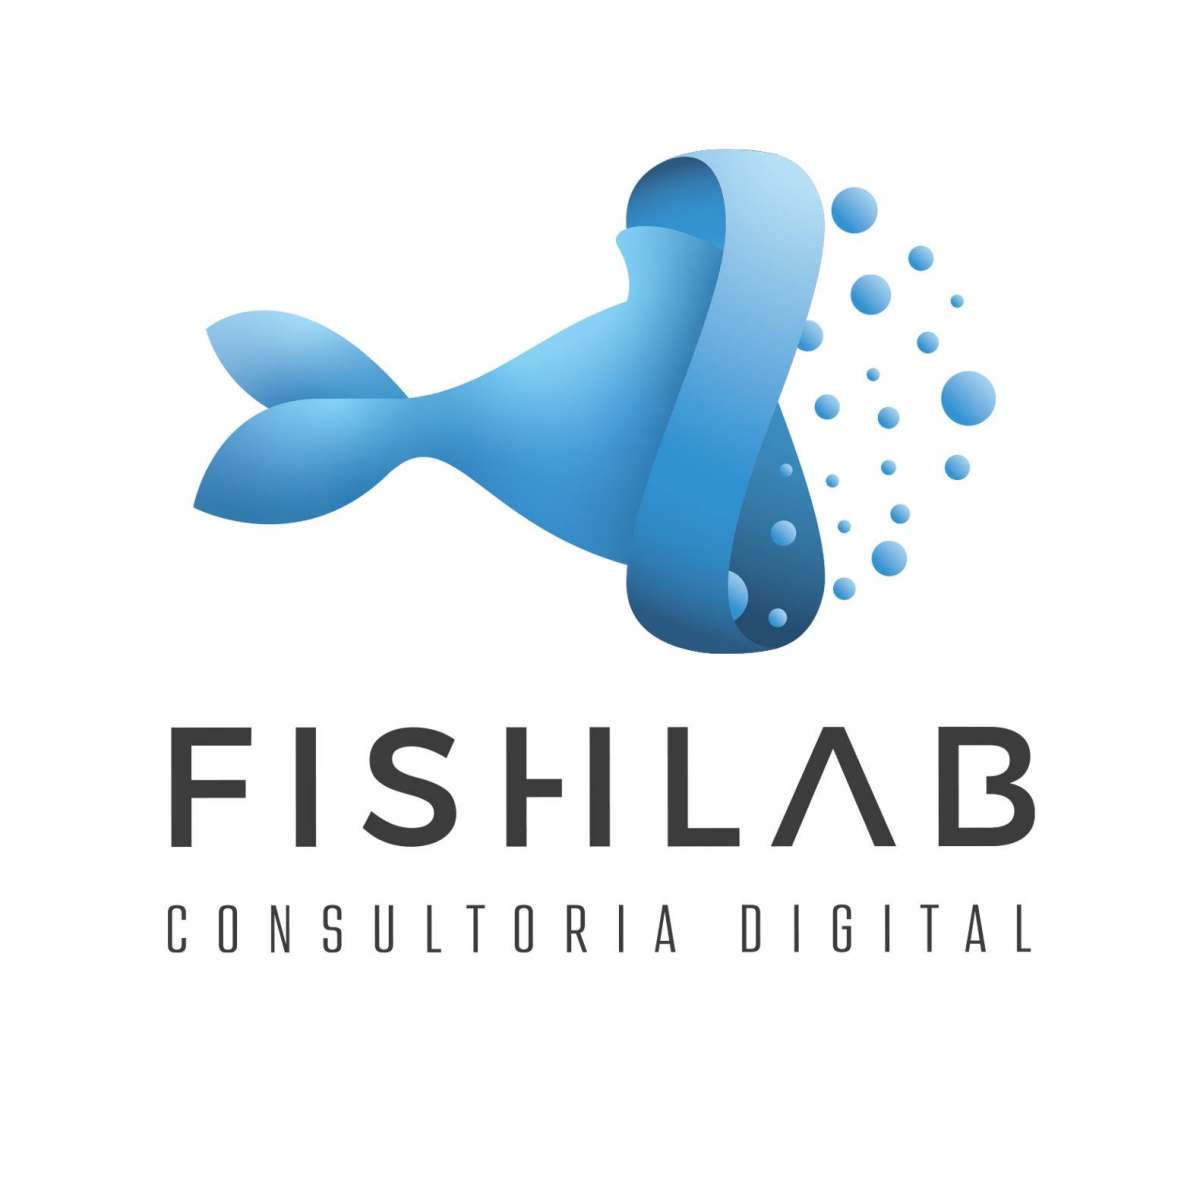 Fishlab Consultoria Digital - Cascais - Design de Logotipos